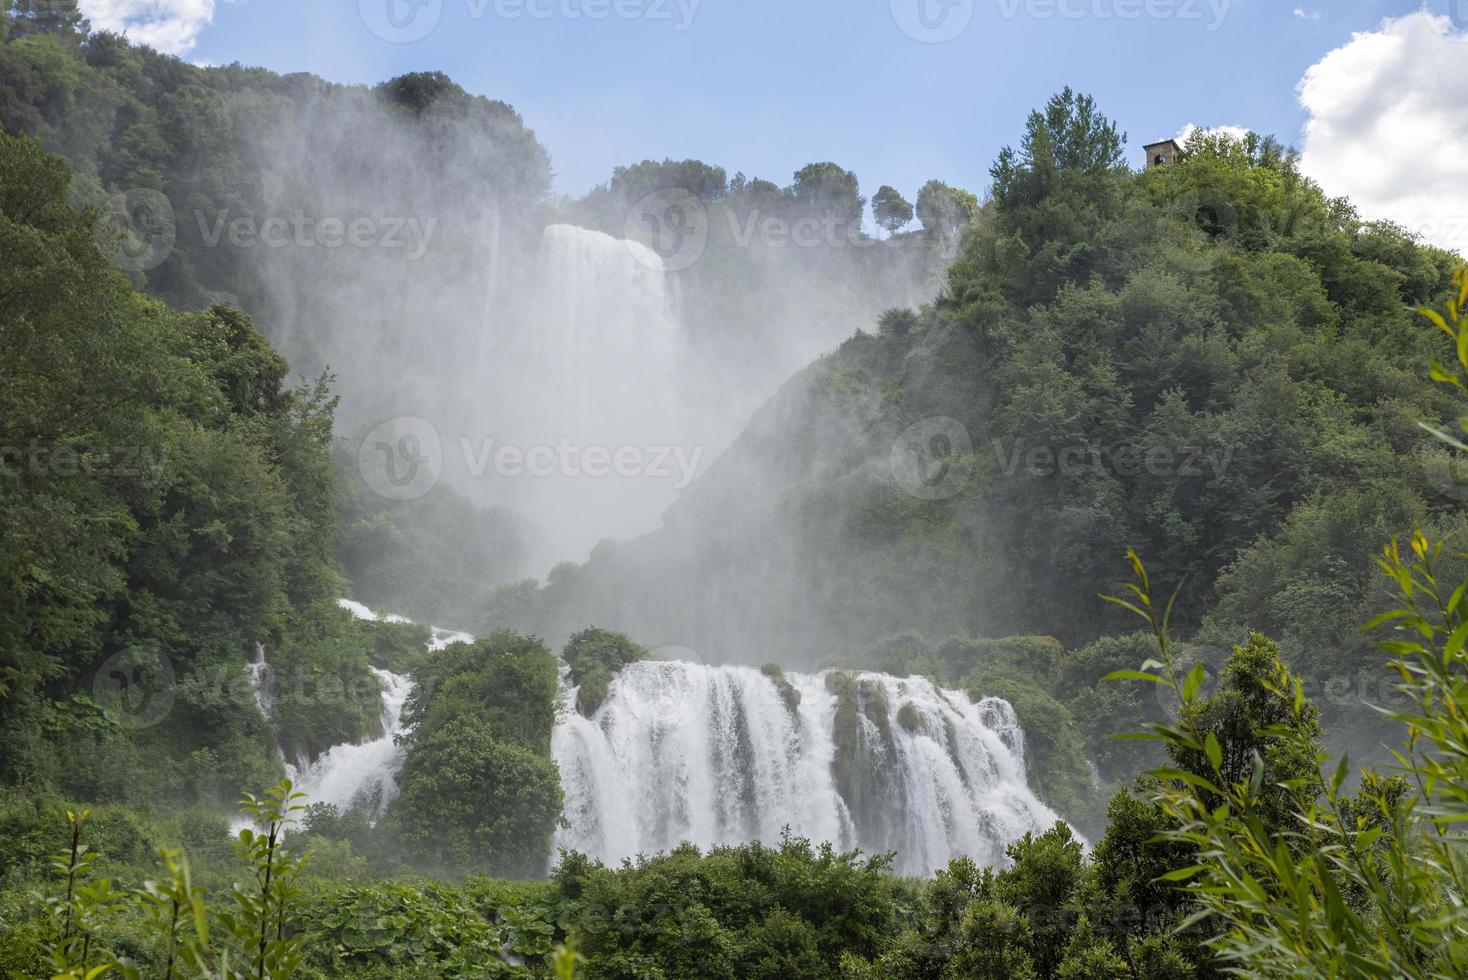 Marmore waterval de hoogste van Europa foto